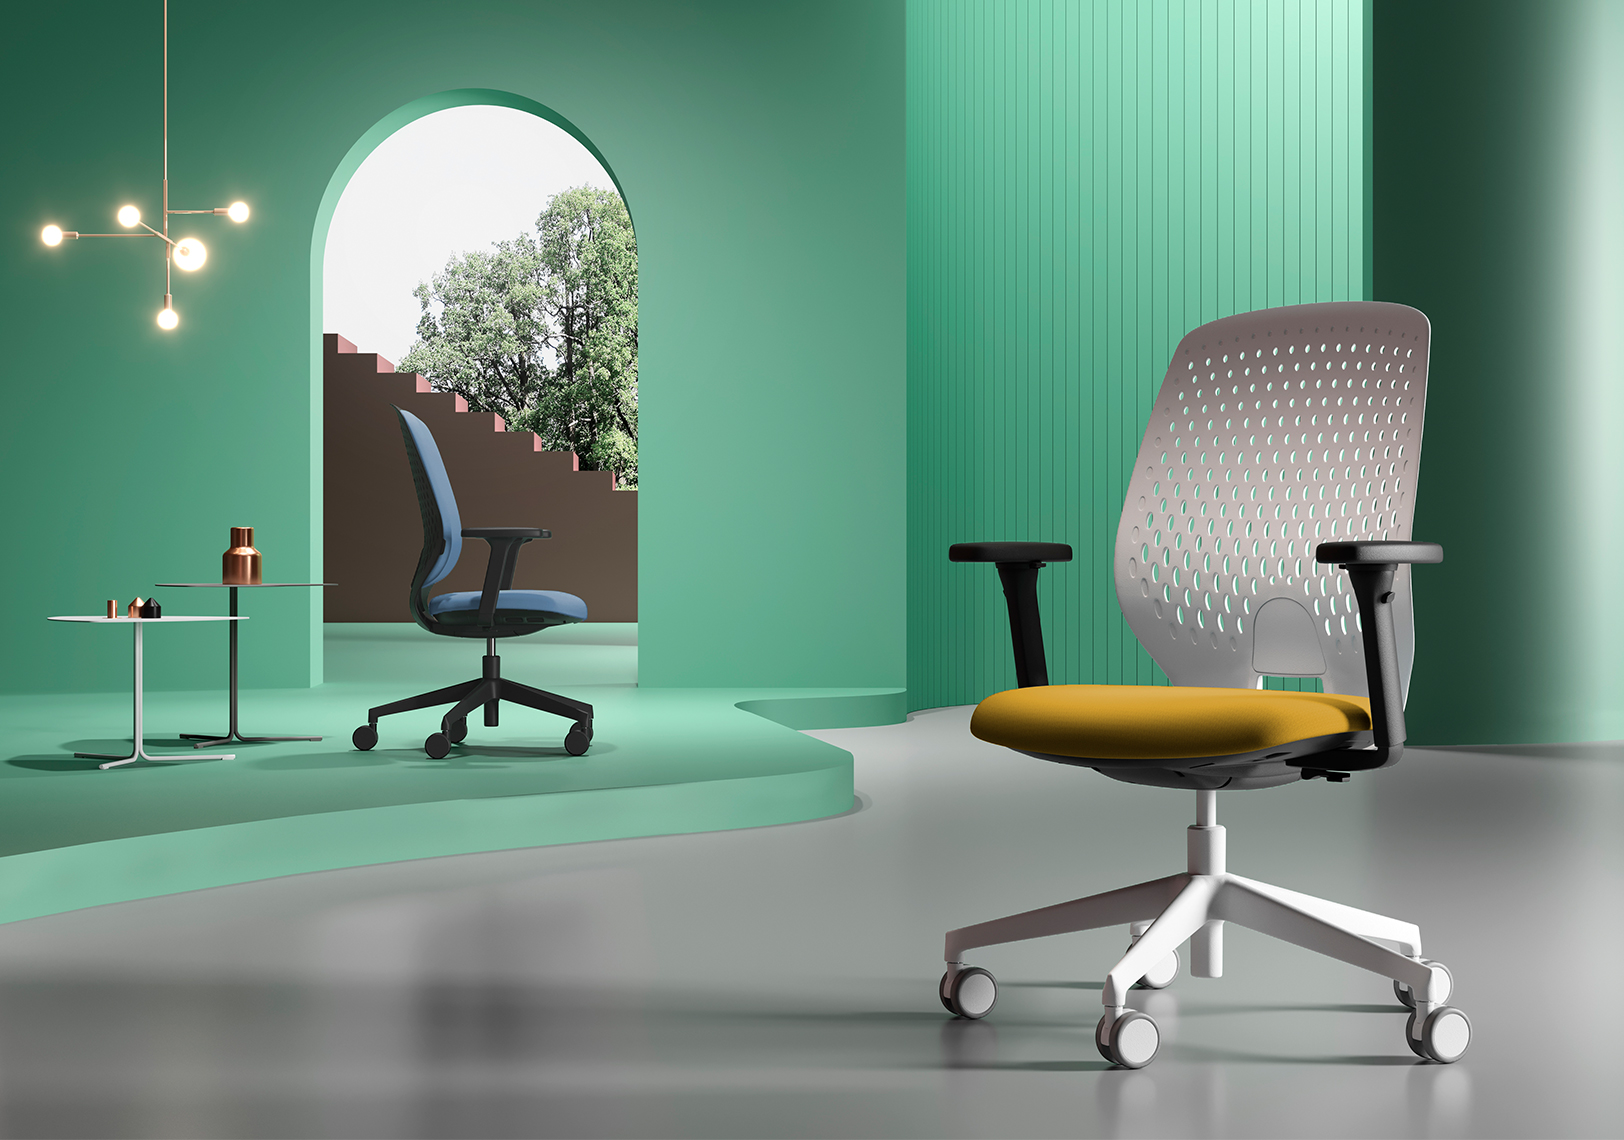 New intelligent chair platform for Kastel